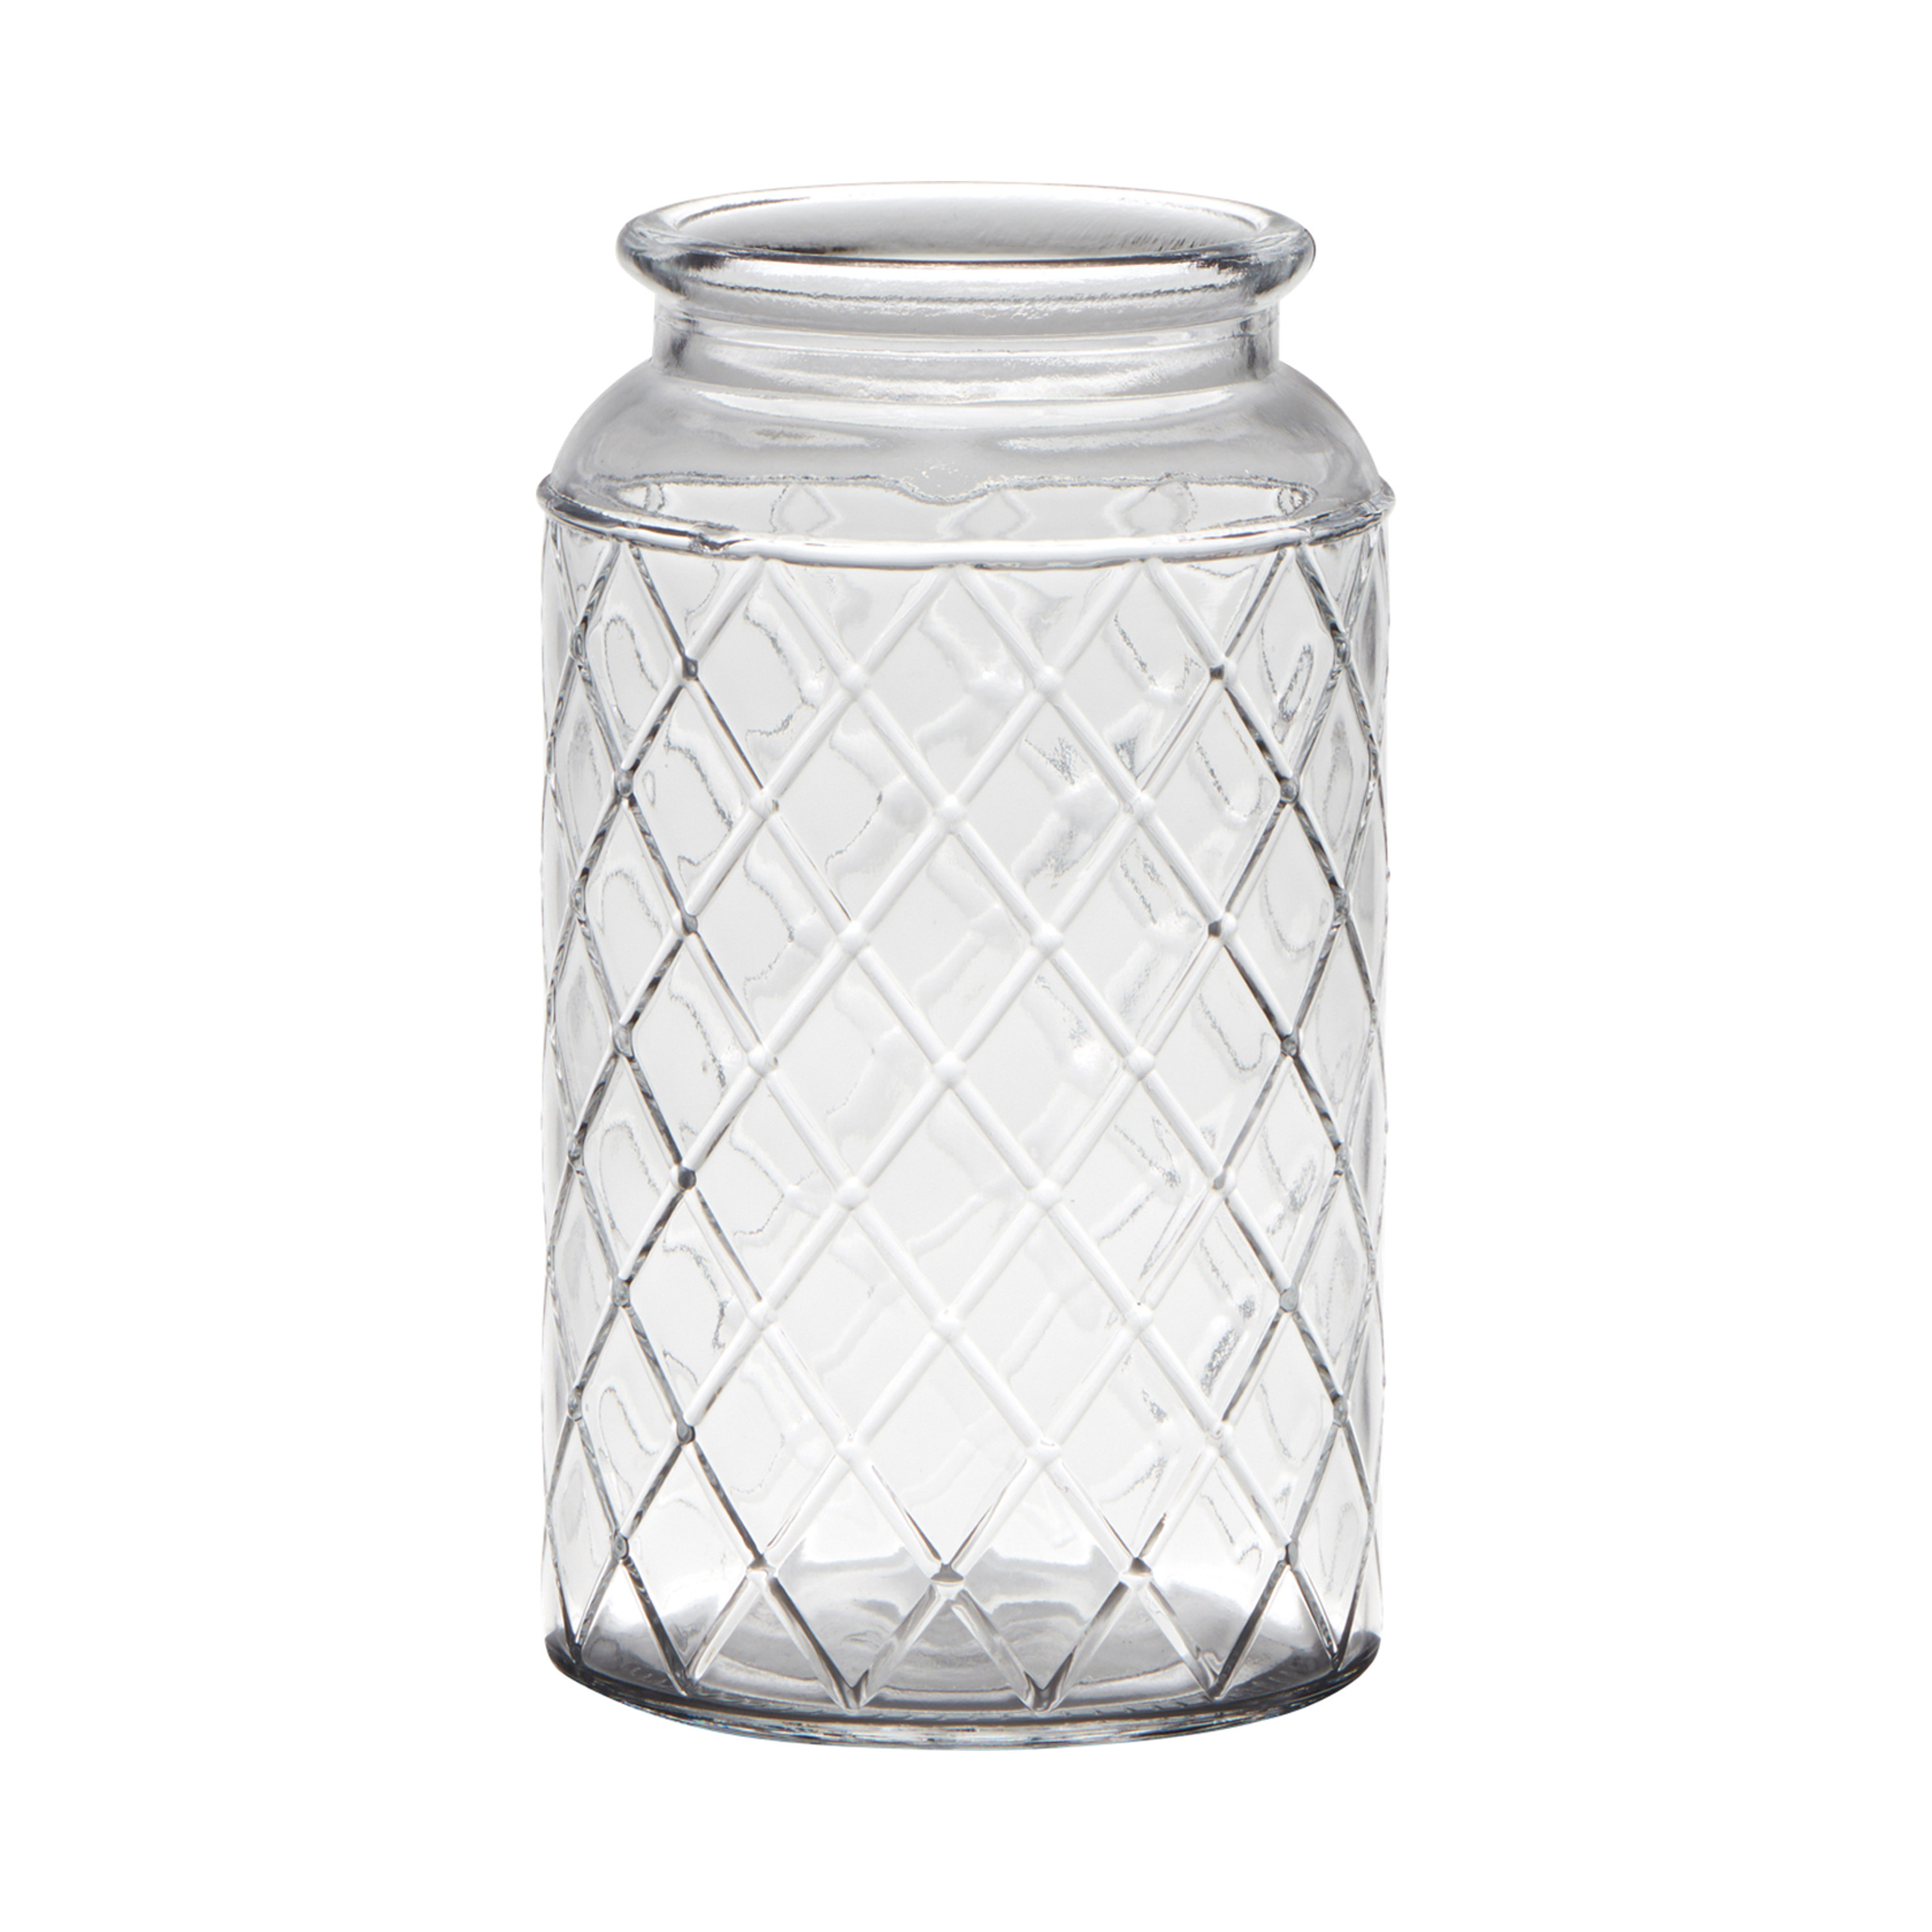 Hakbijl Glass Bloemenvaas Brussel - transparant - eco glas - D10 x H18 cm - ruiten patroon - cilinder vaas -